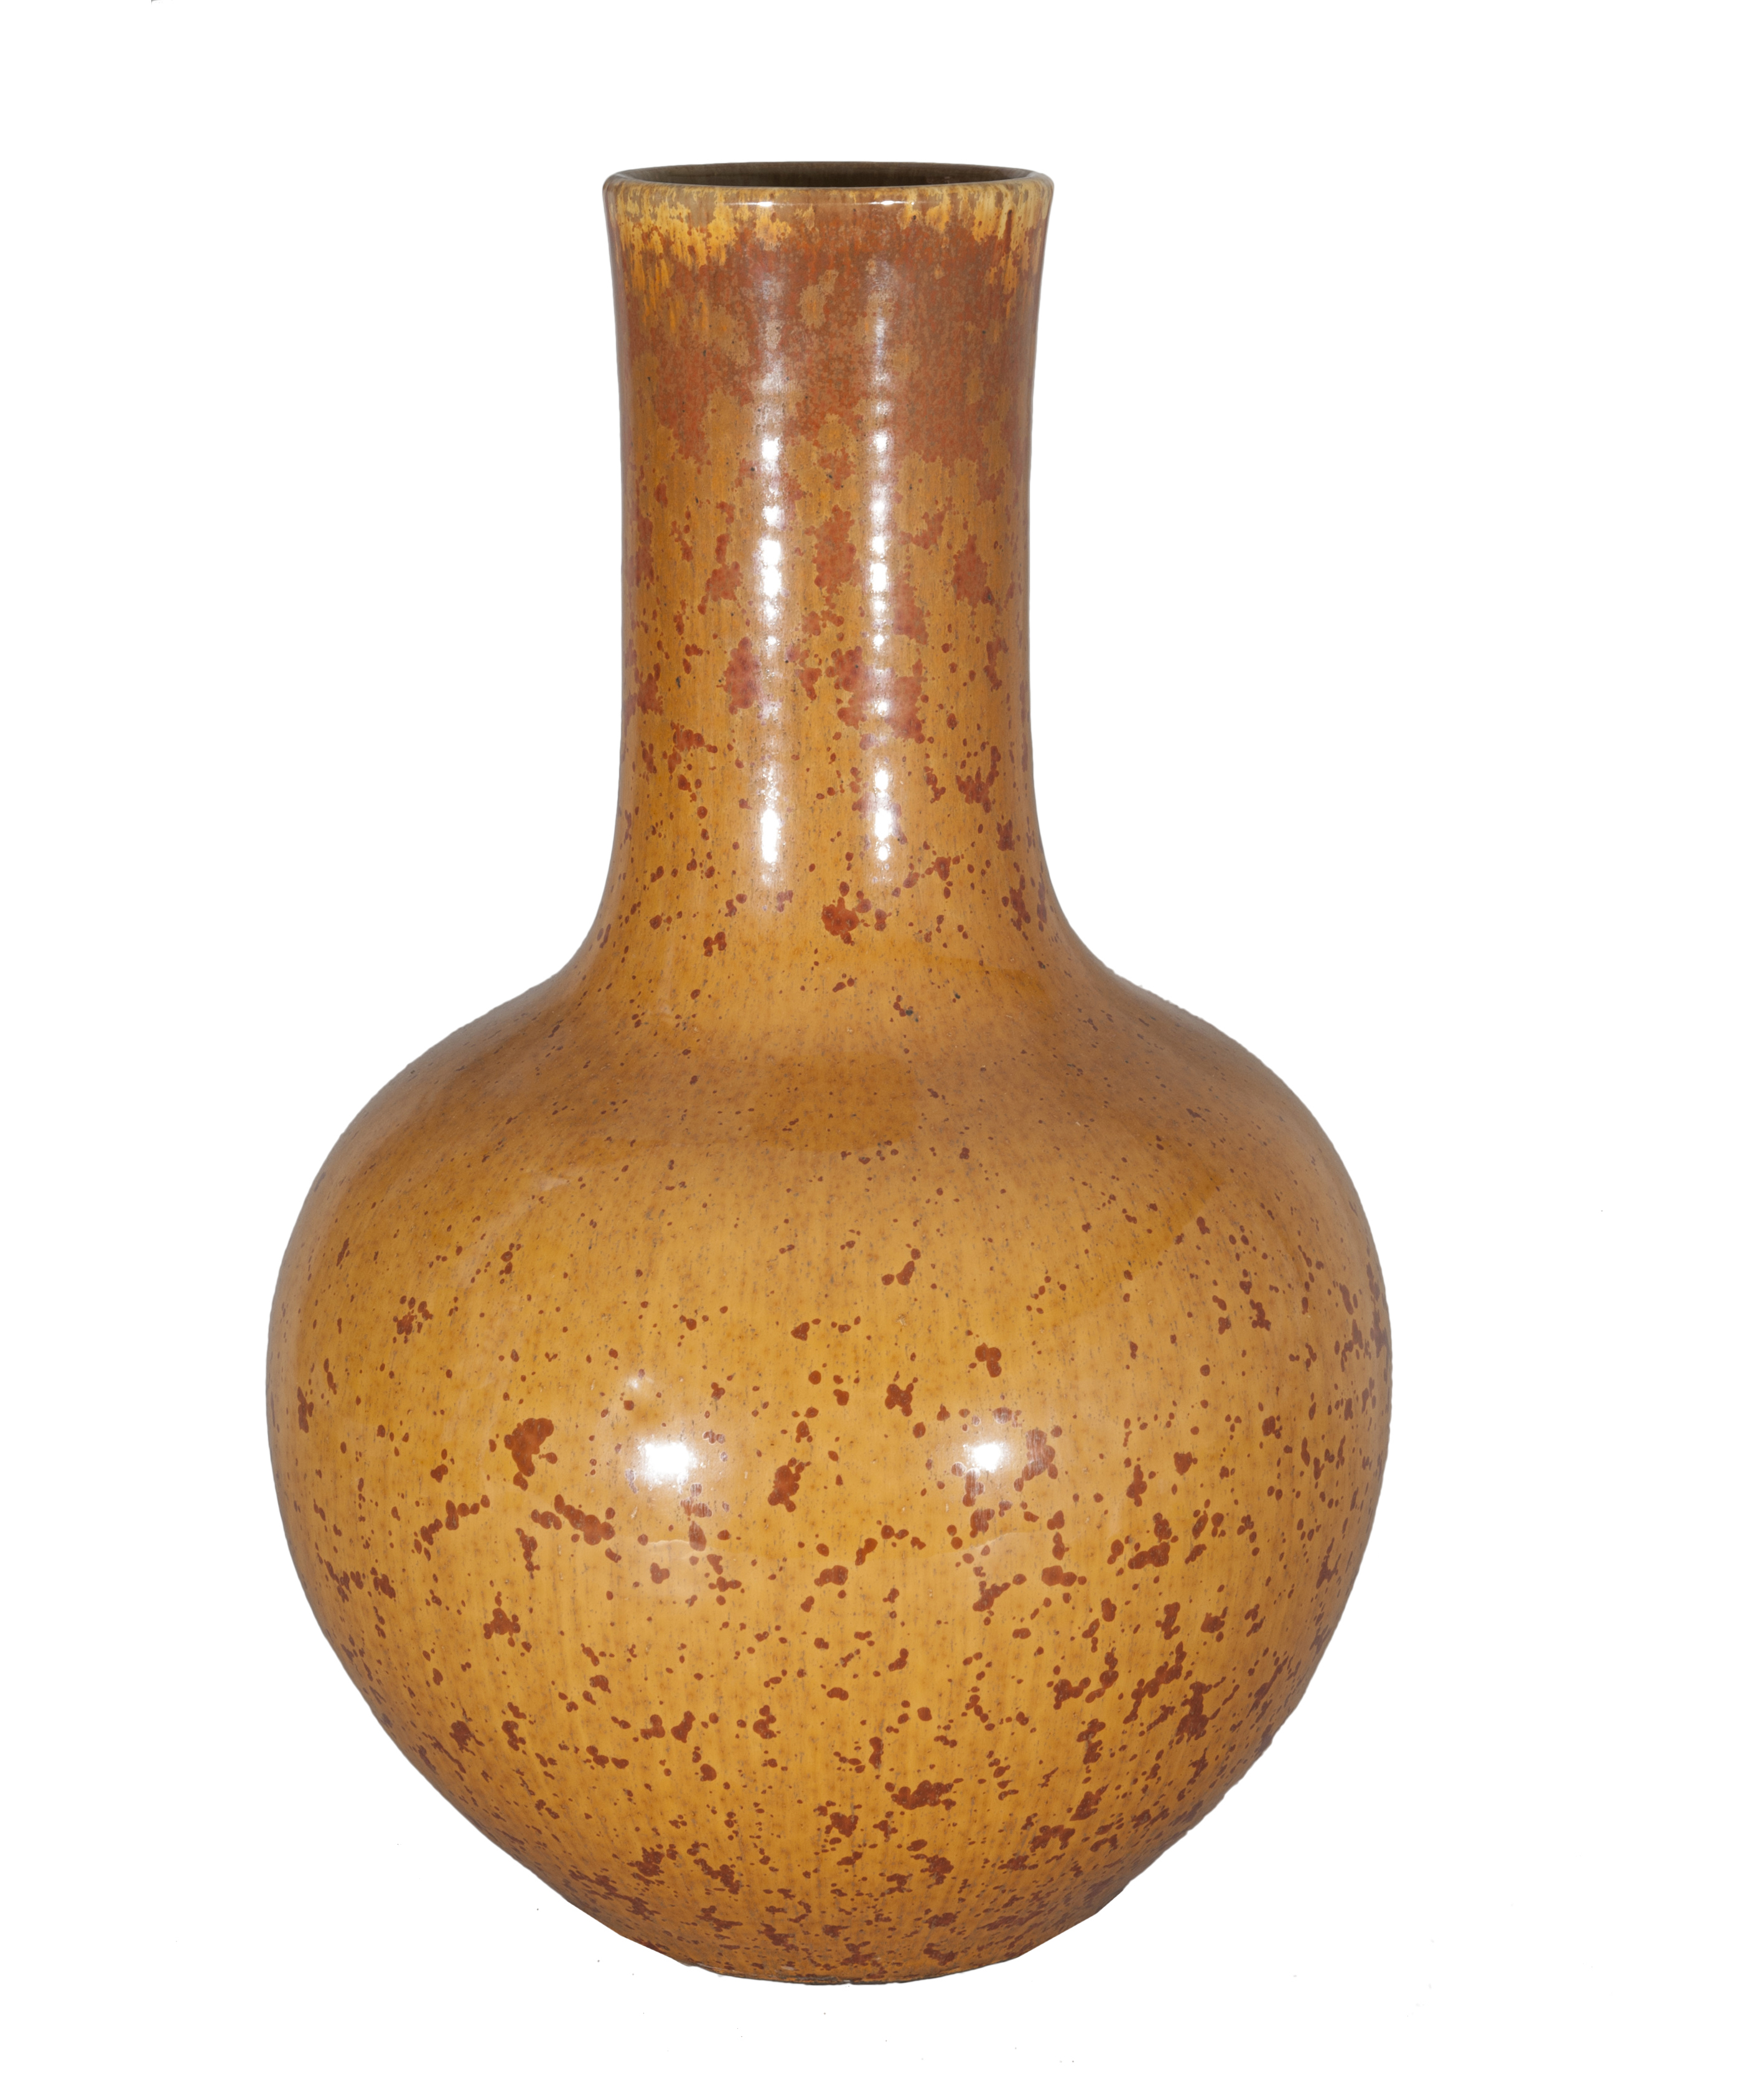 A tall globular vase with ochre-ground glaze